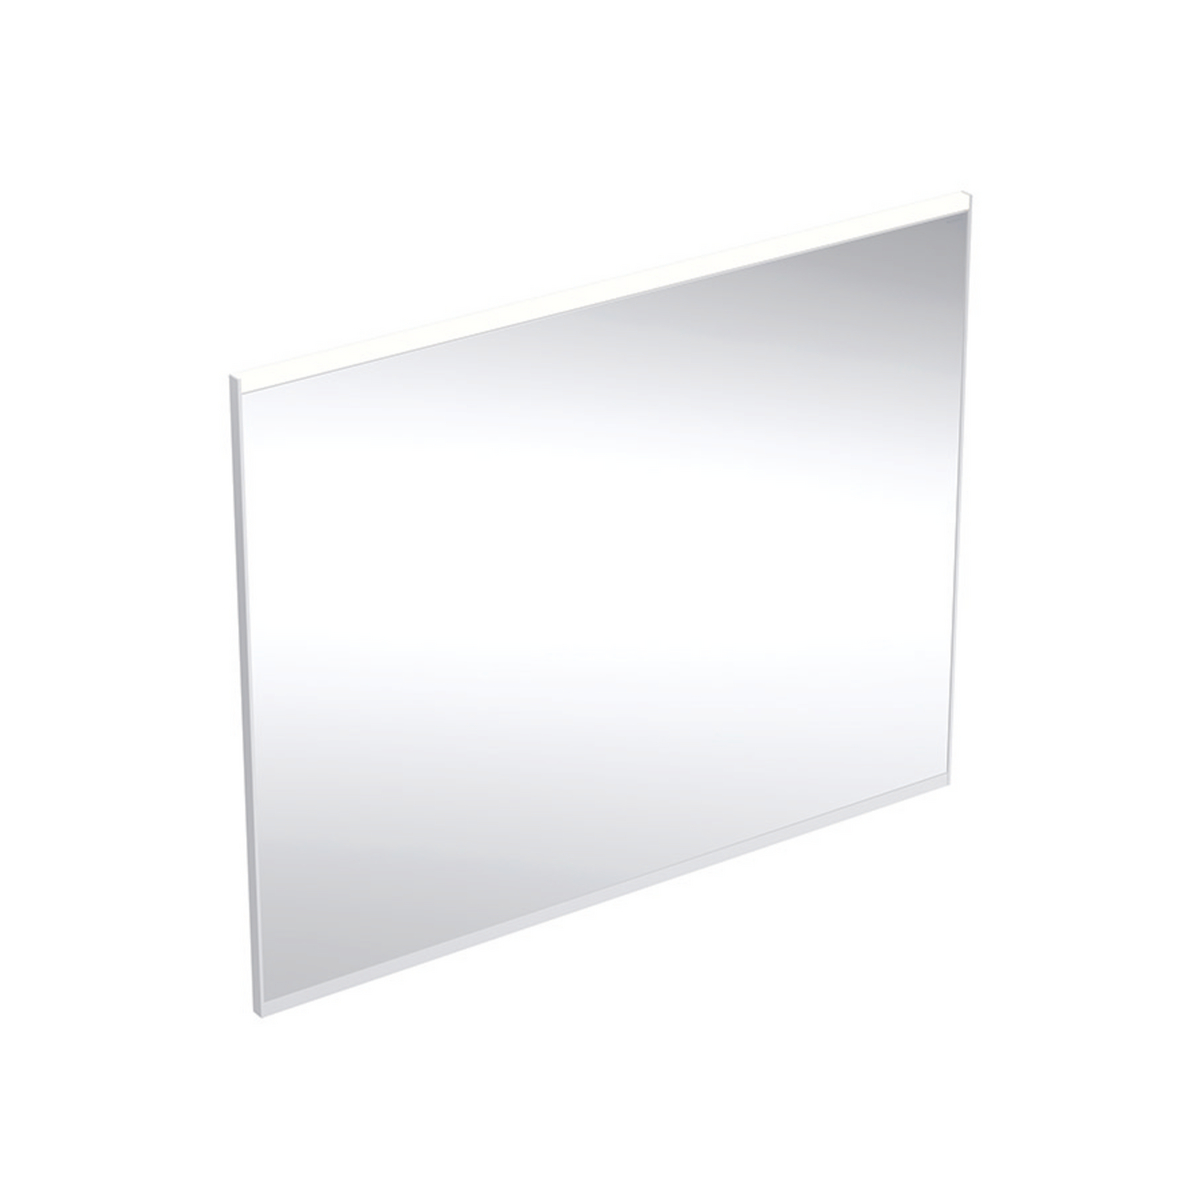 Option Plus Square illuminated mirror with lighting - 900mm